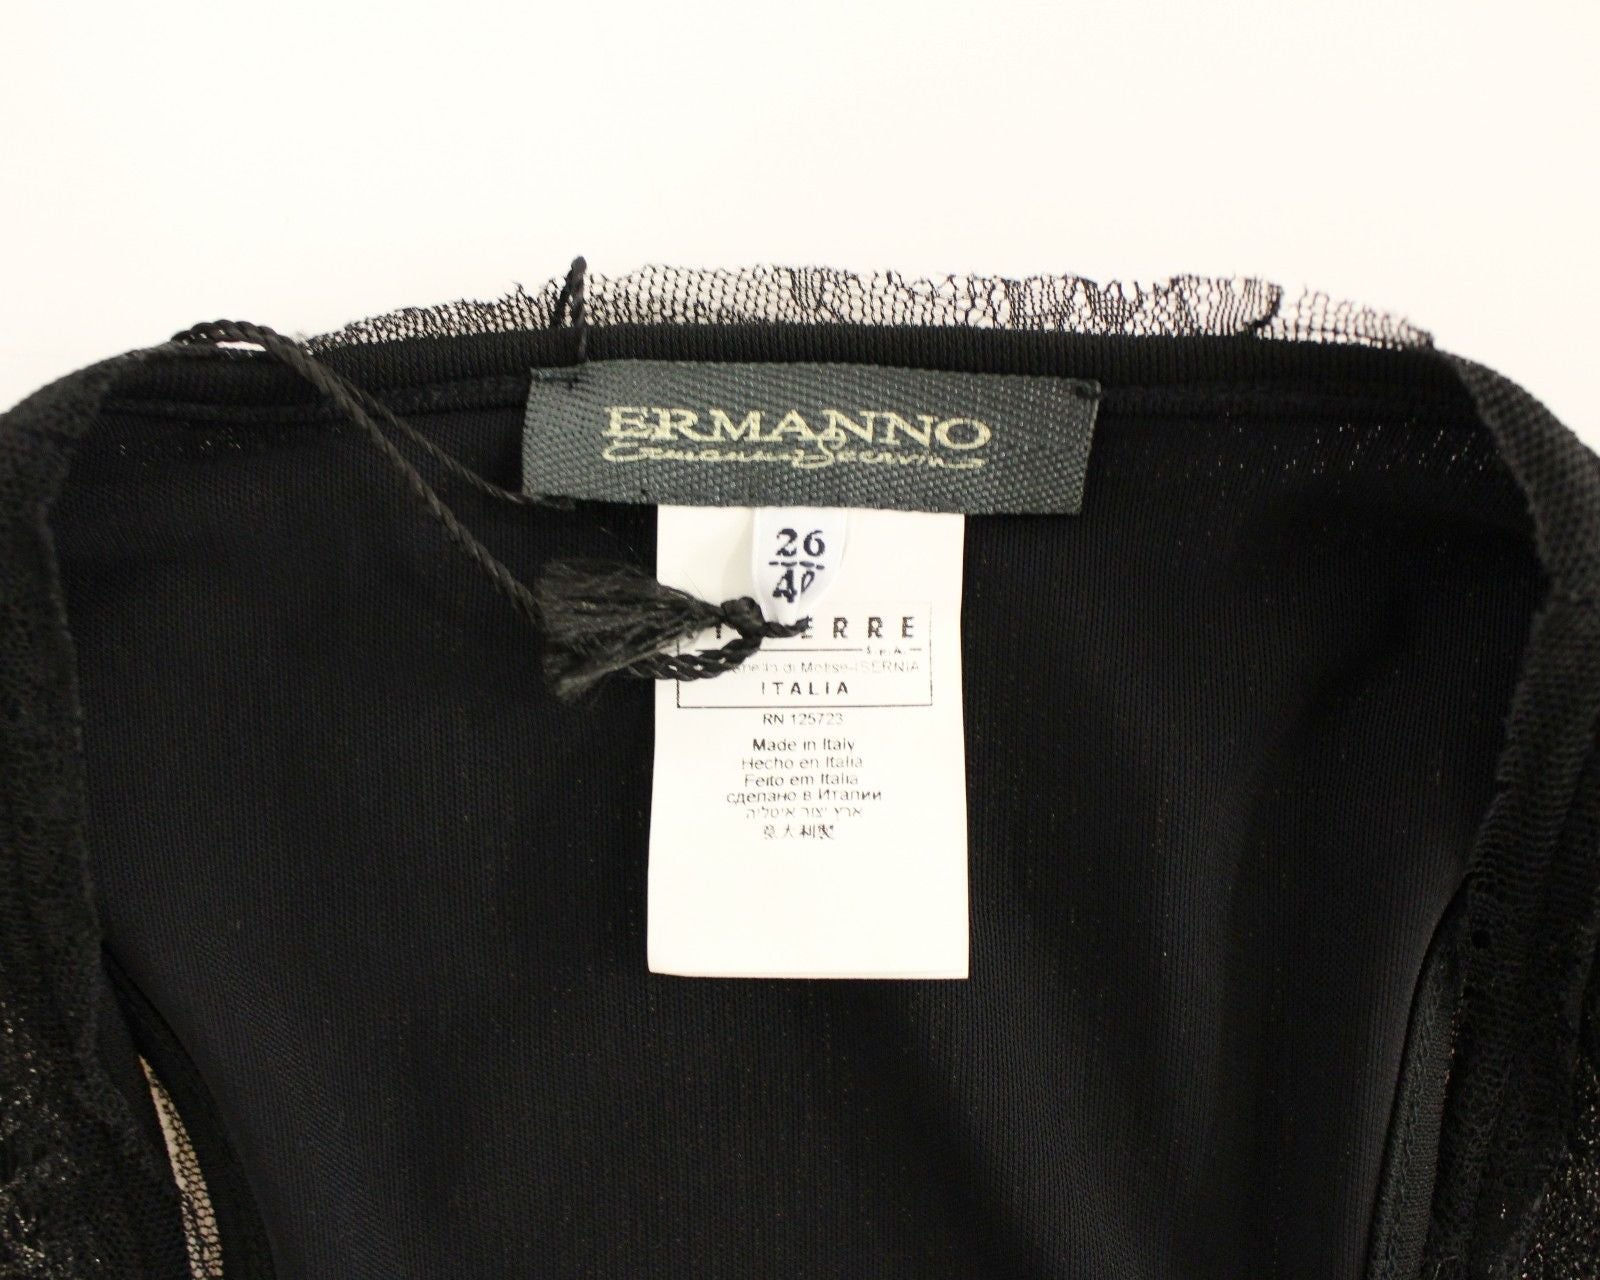 Buy Black Nylon Lace Detail Mini Dress by Ermanno Scervino